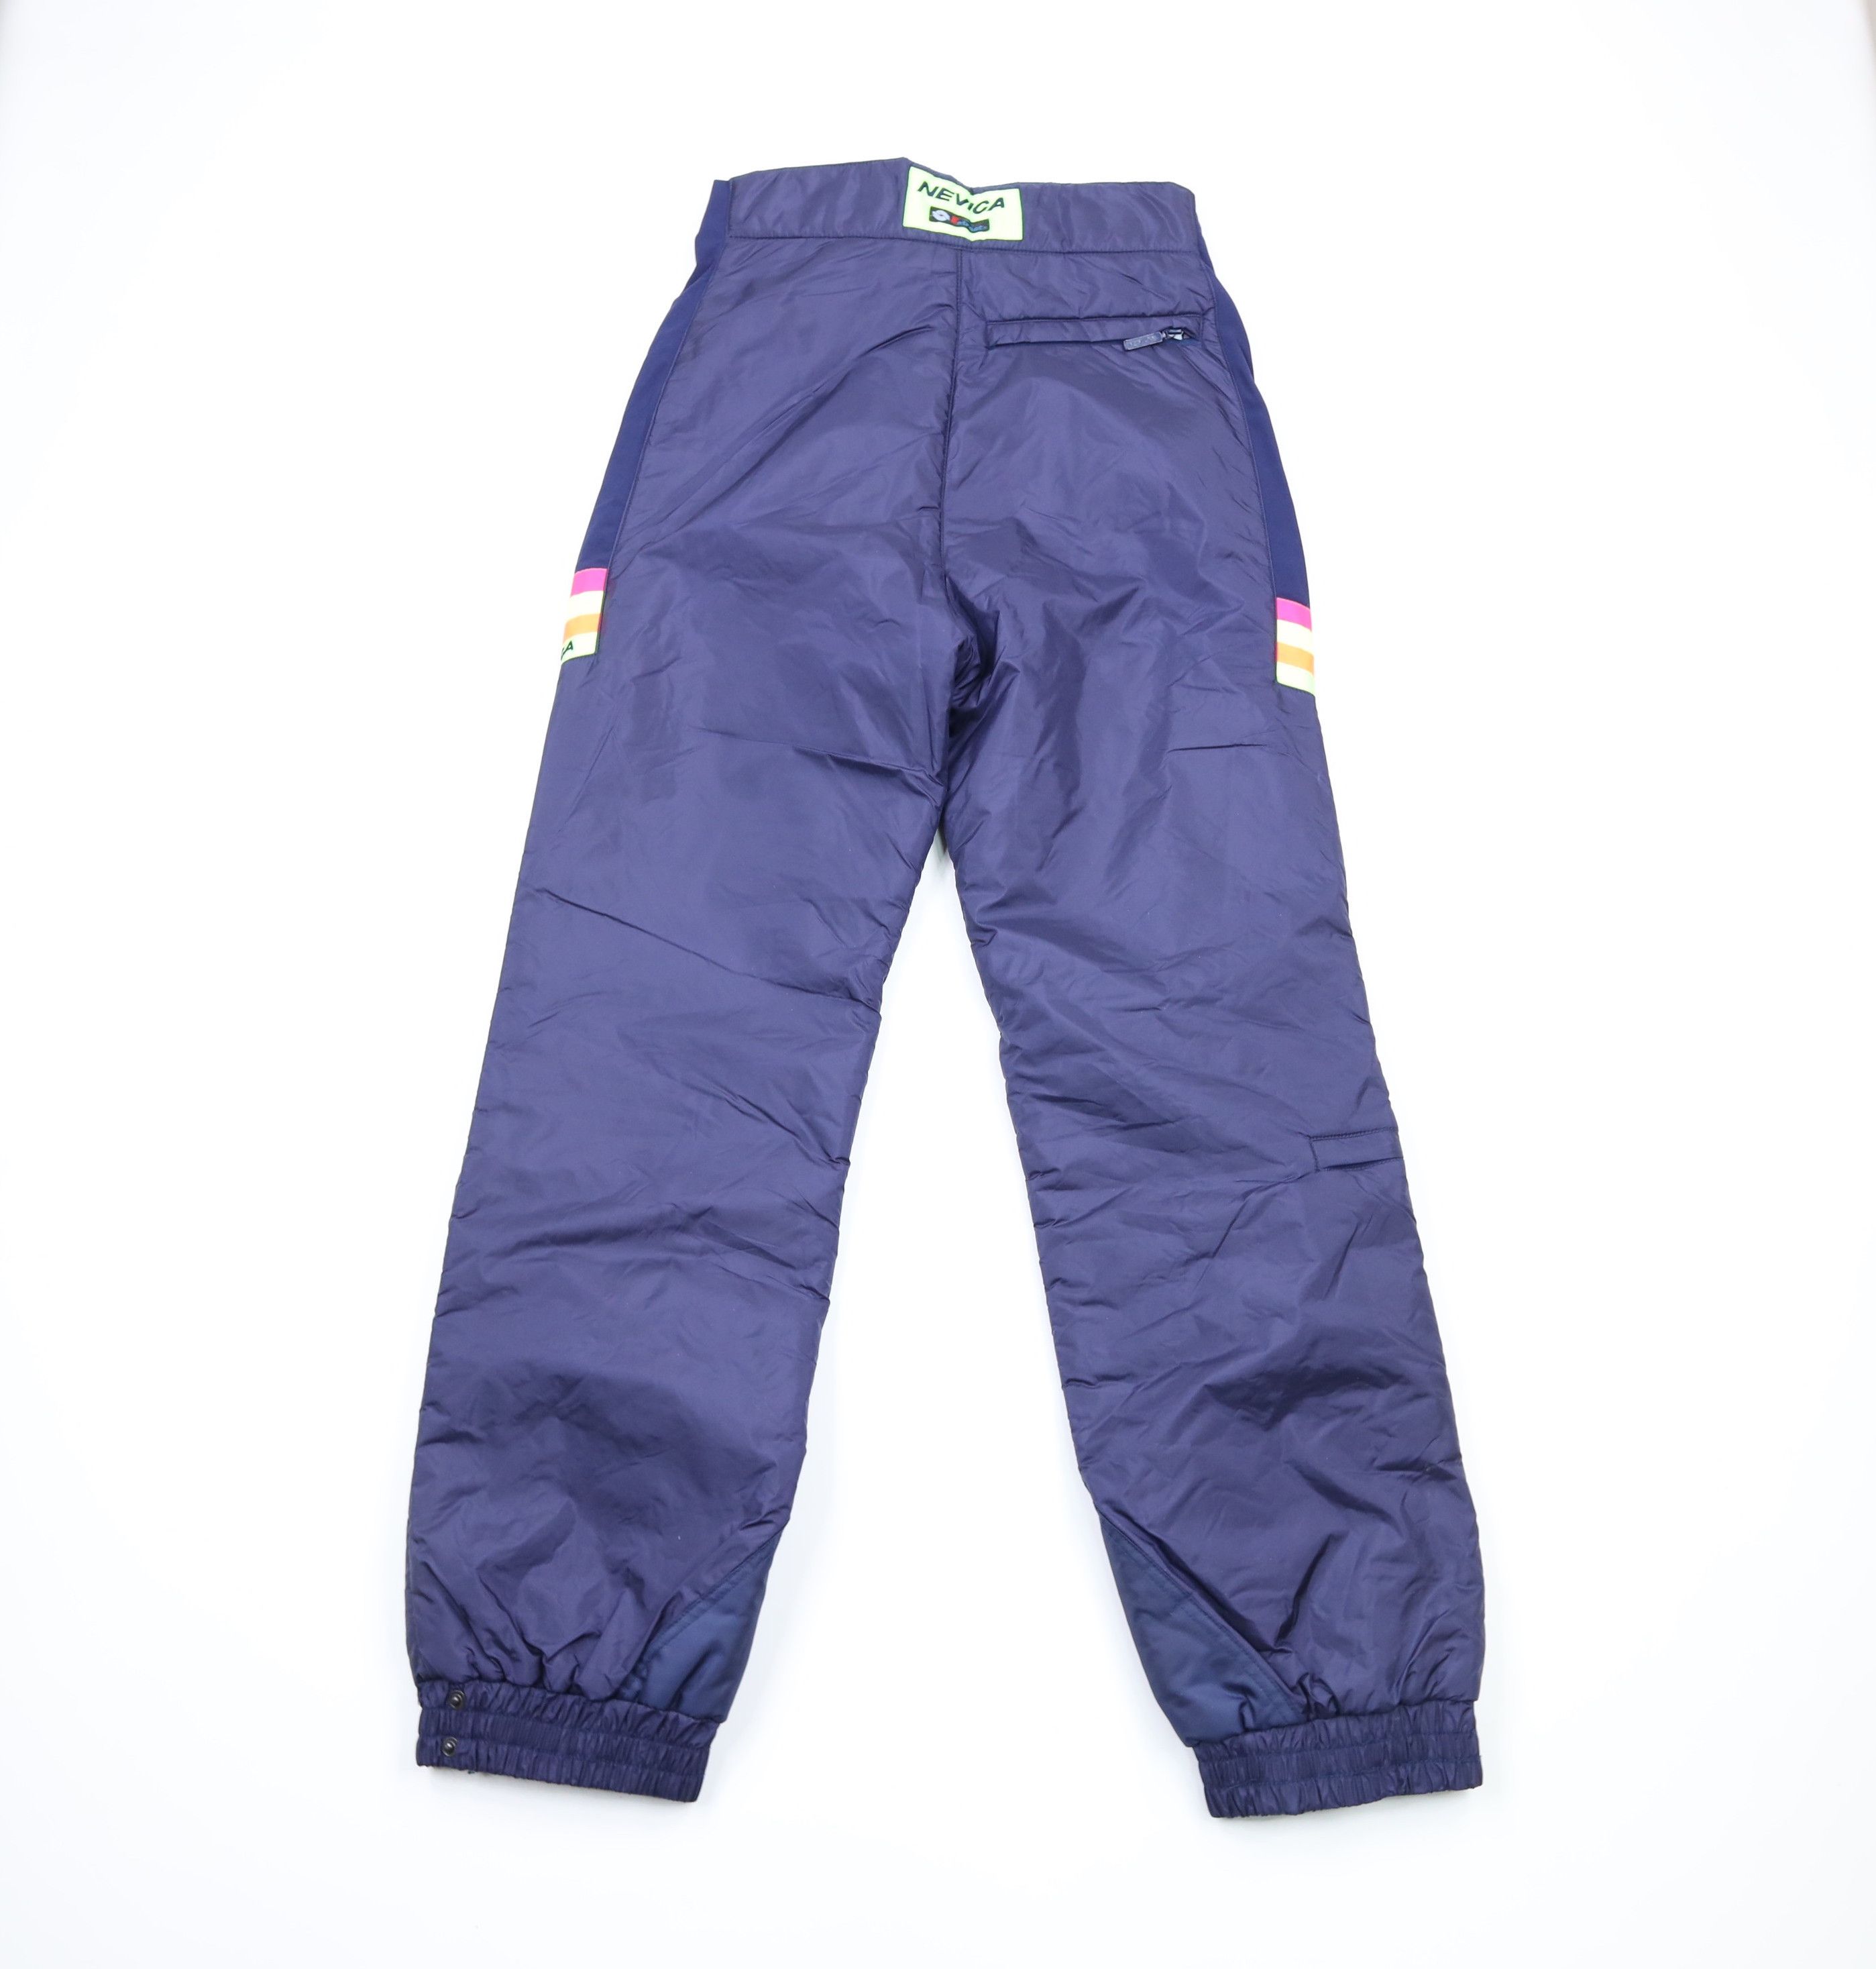 Vintage Vintage 90s Streetwear Cuffed Winter Snow Pants Navy Blue Size US 30 / EU 46 - 13 Thumbnail